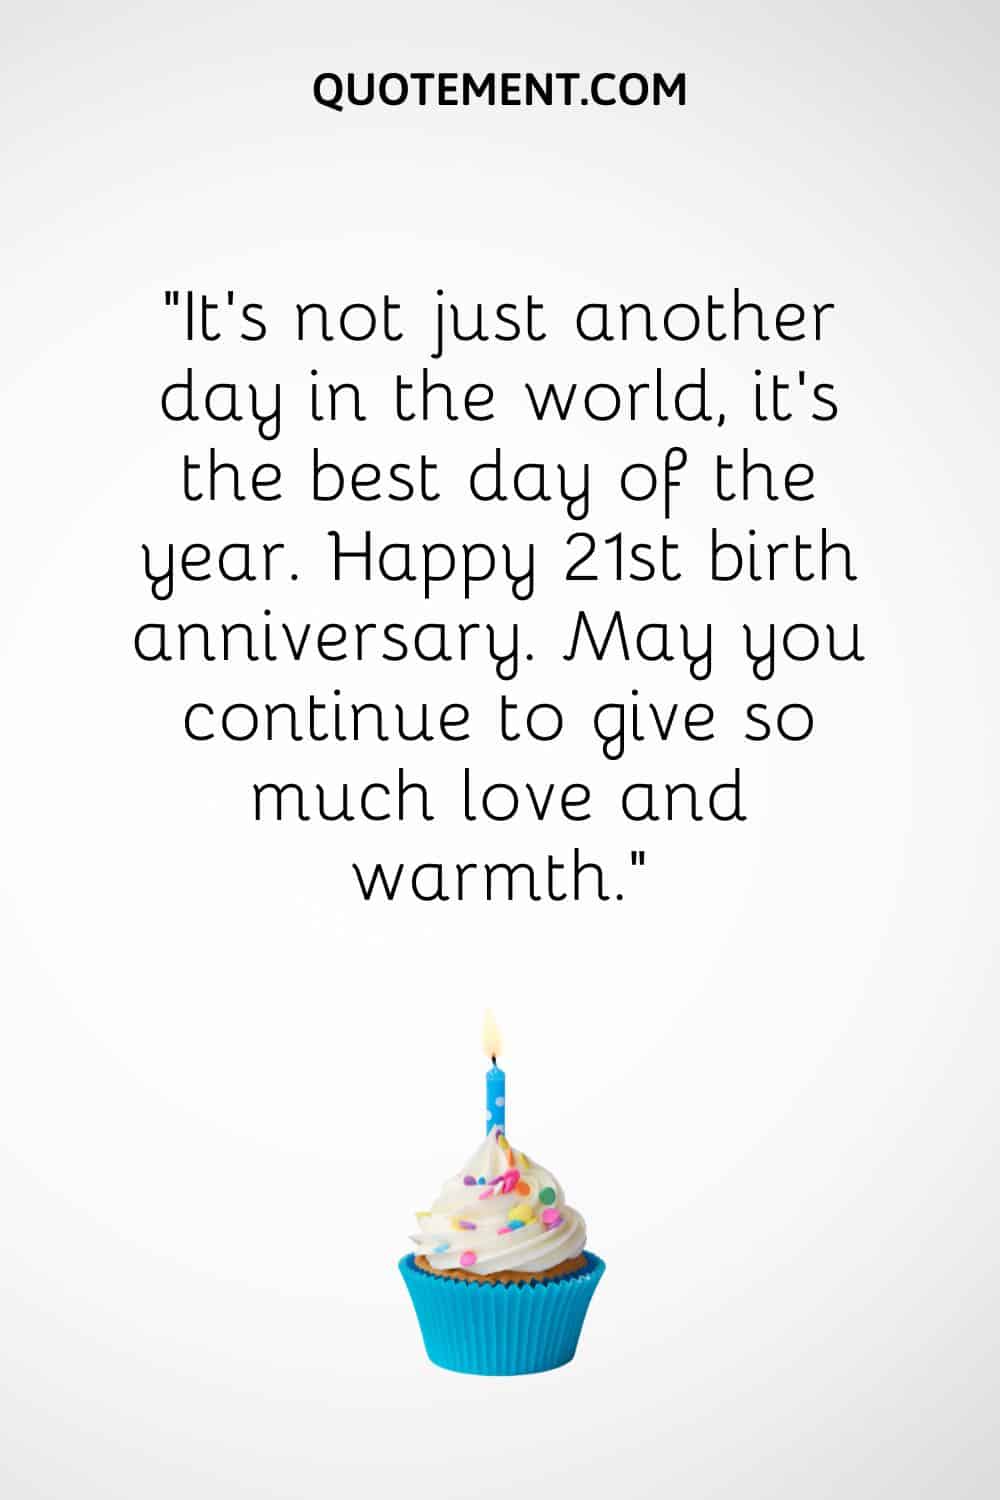 birthday cupcake image representing 21st birthday message